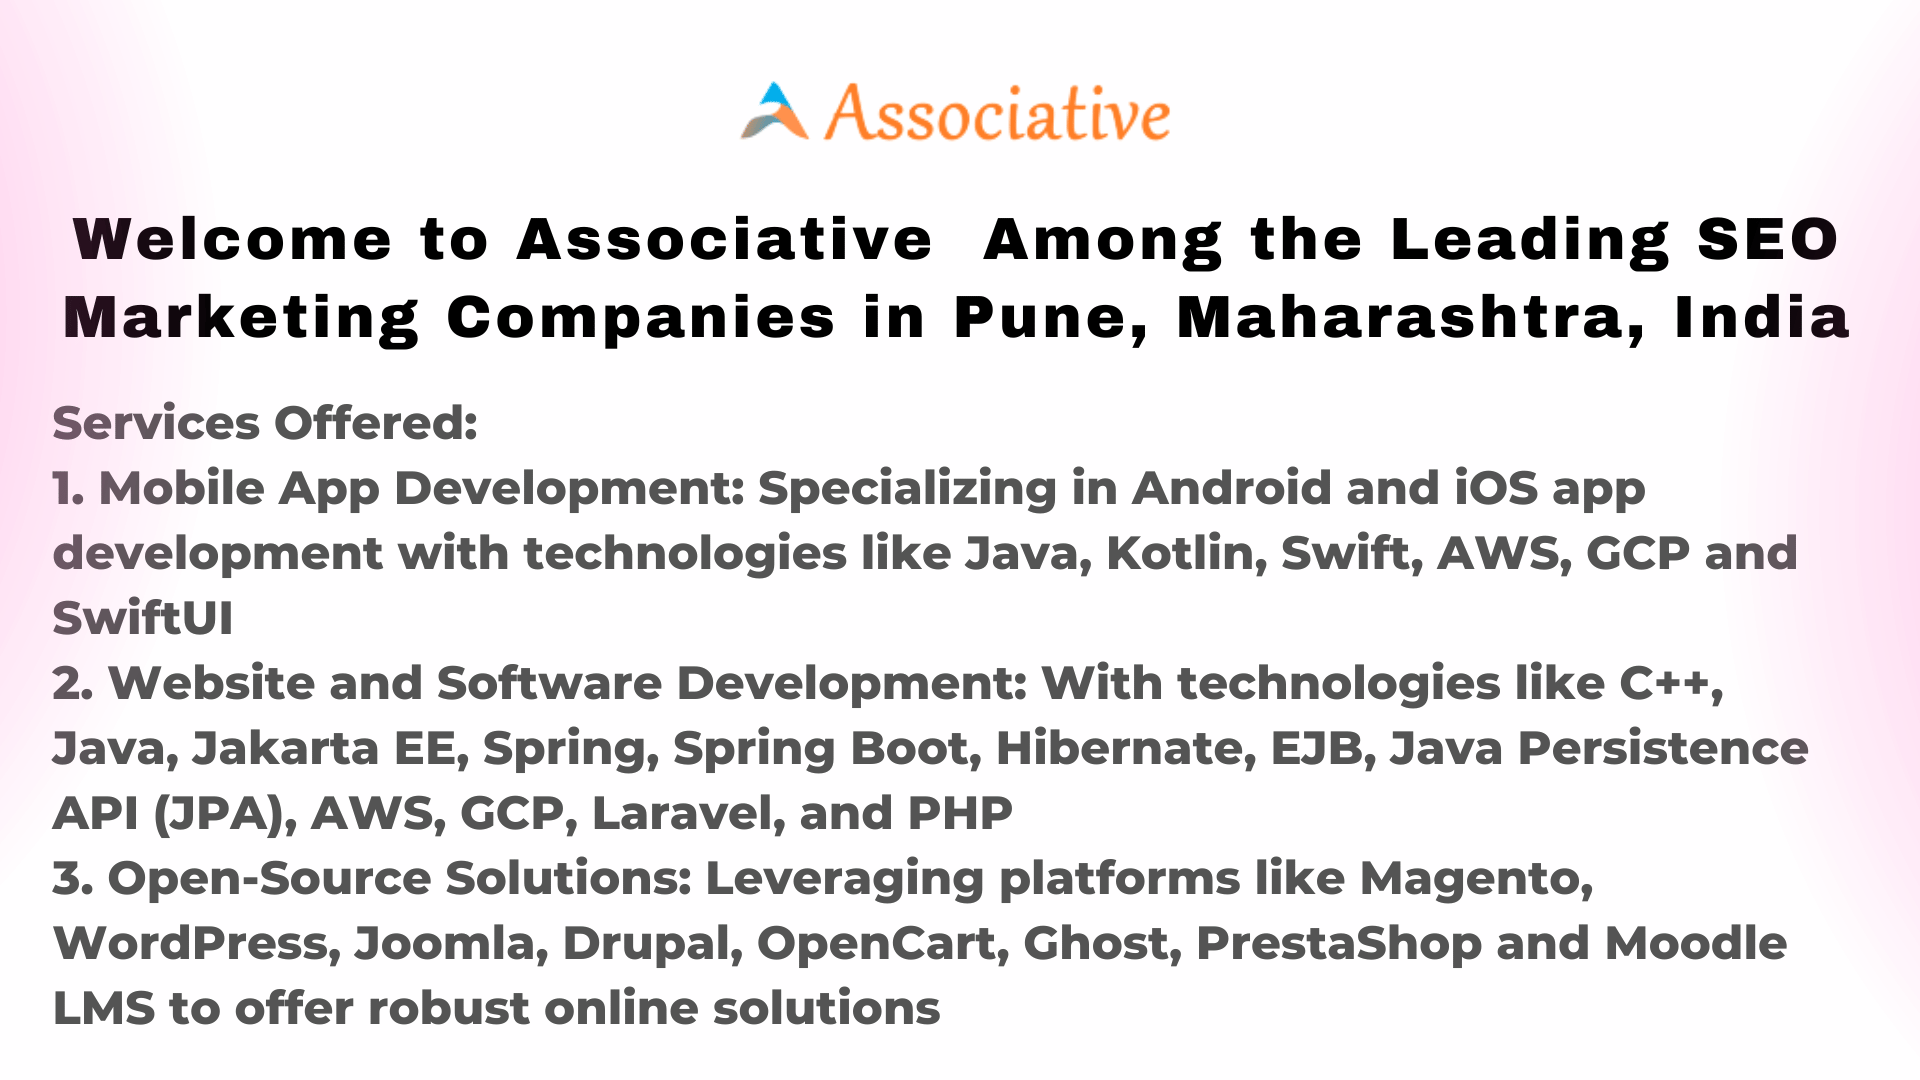 Welcome to Associative Among the Leading SEO Marketing Companies in Pune, Maharashtra, India